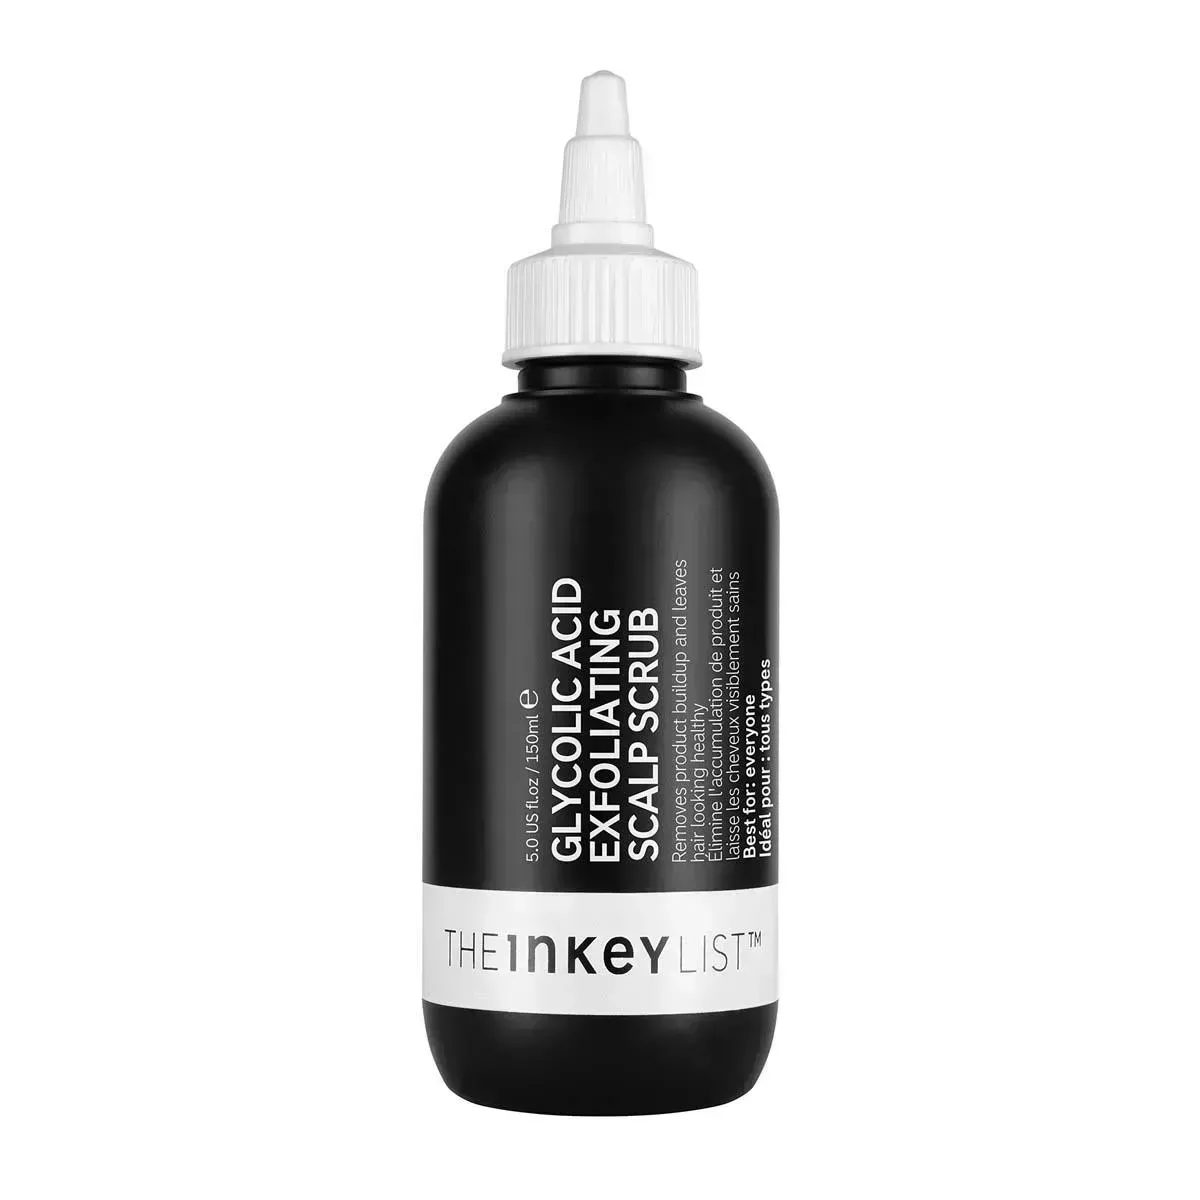 Bottle of the Inkey List Glycolic Acid exfoliating scalp scrub on a white background